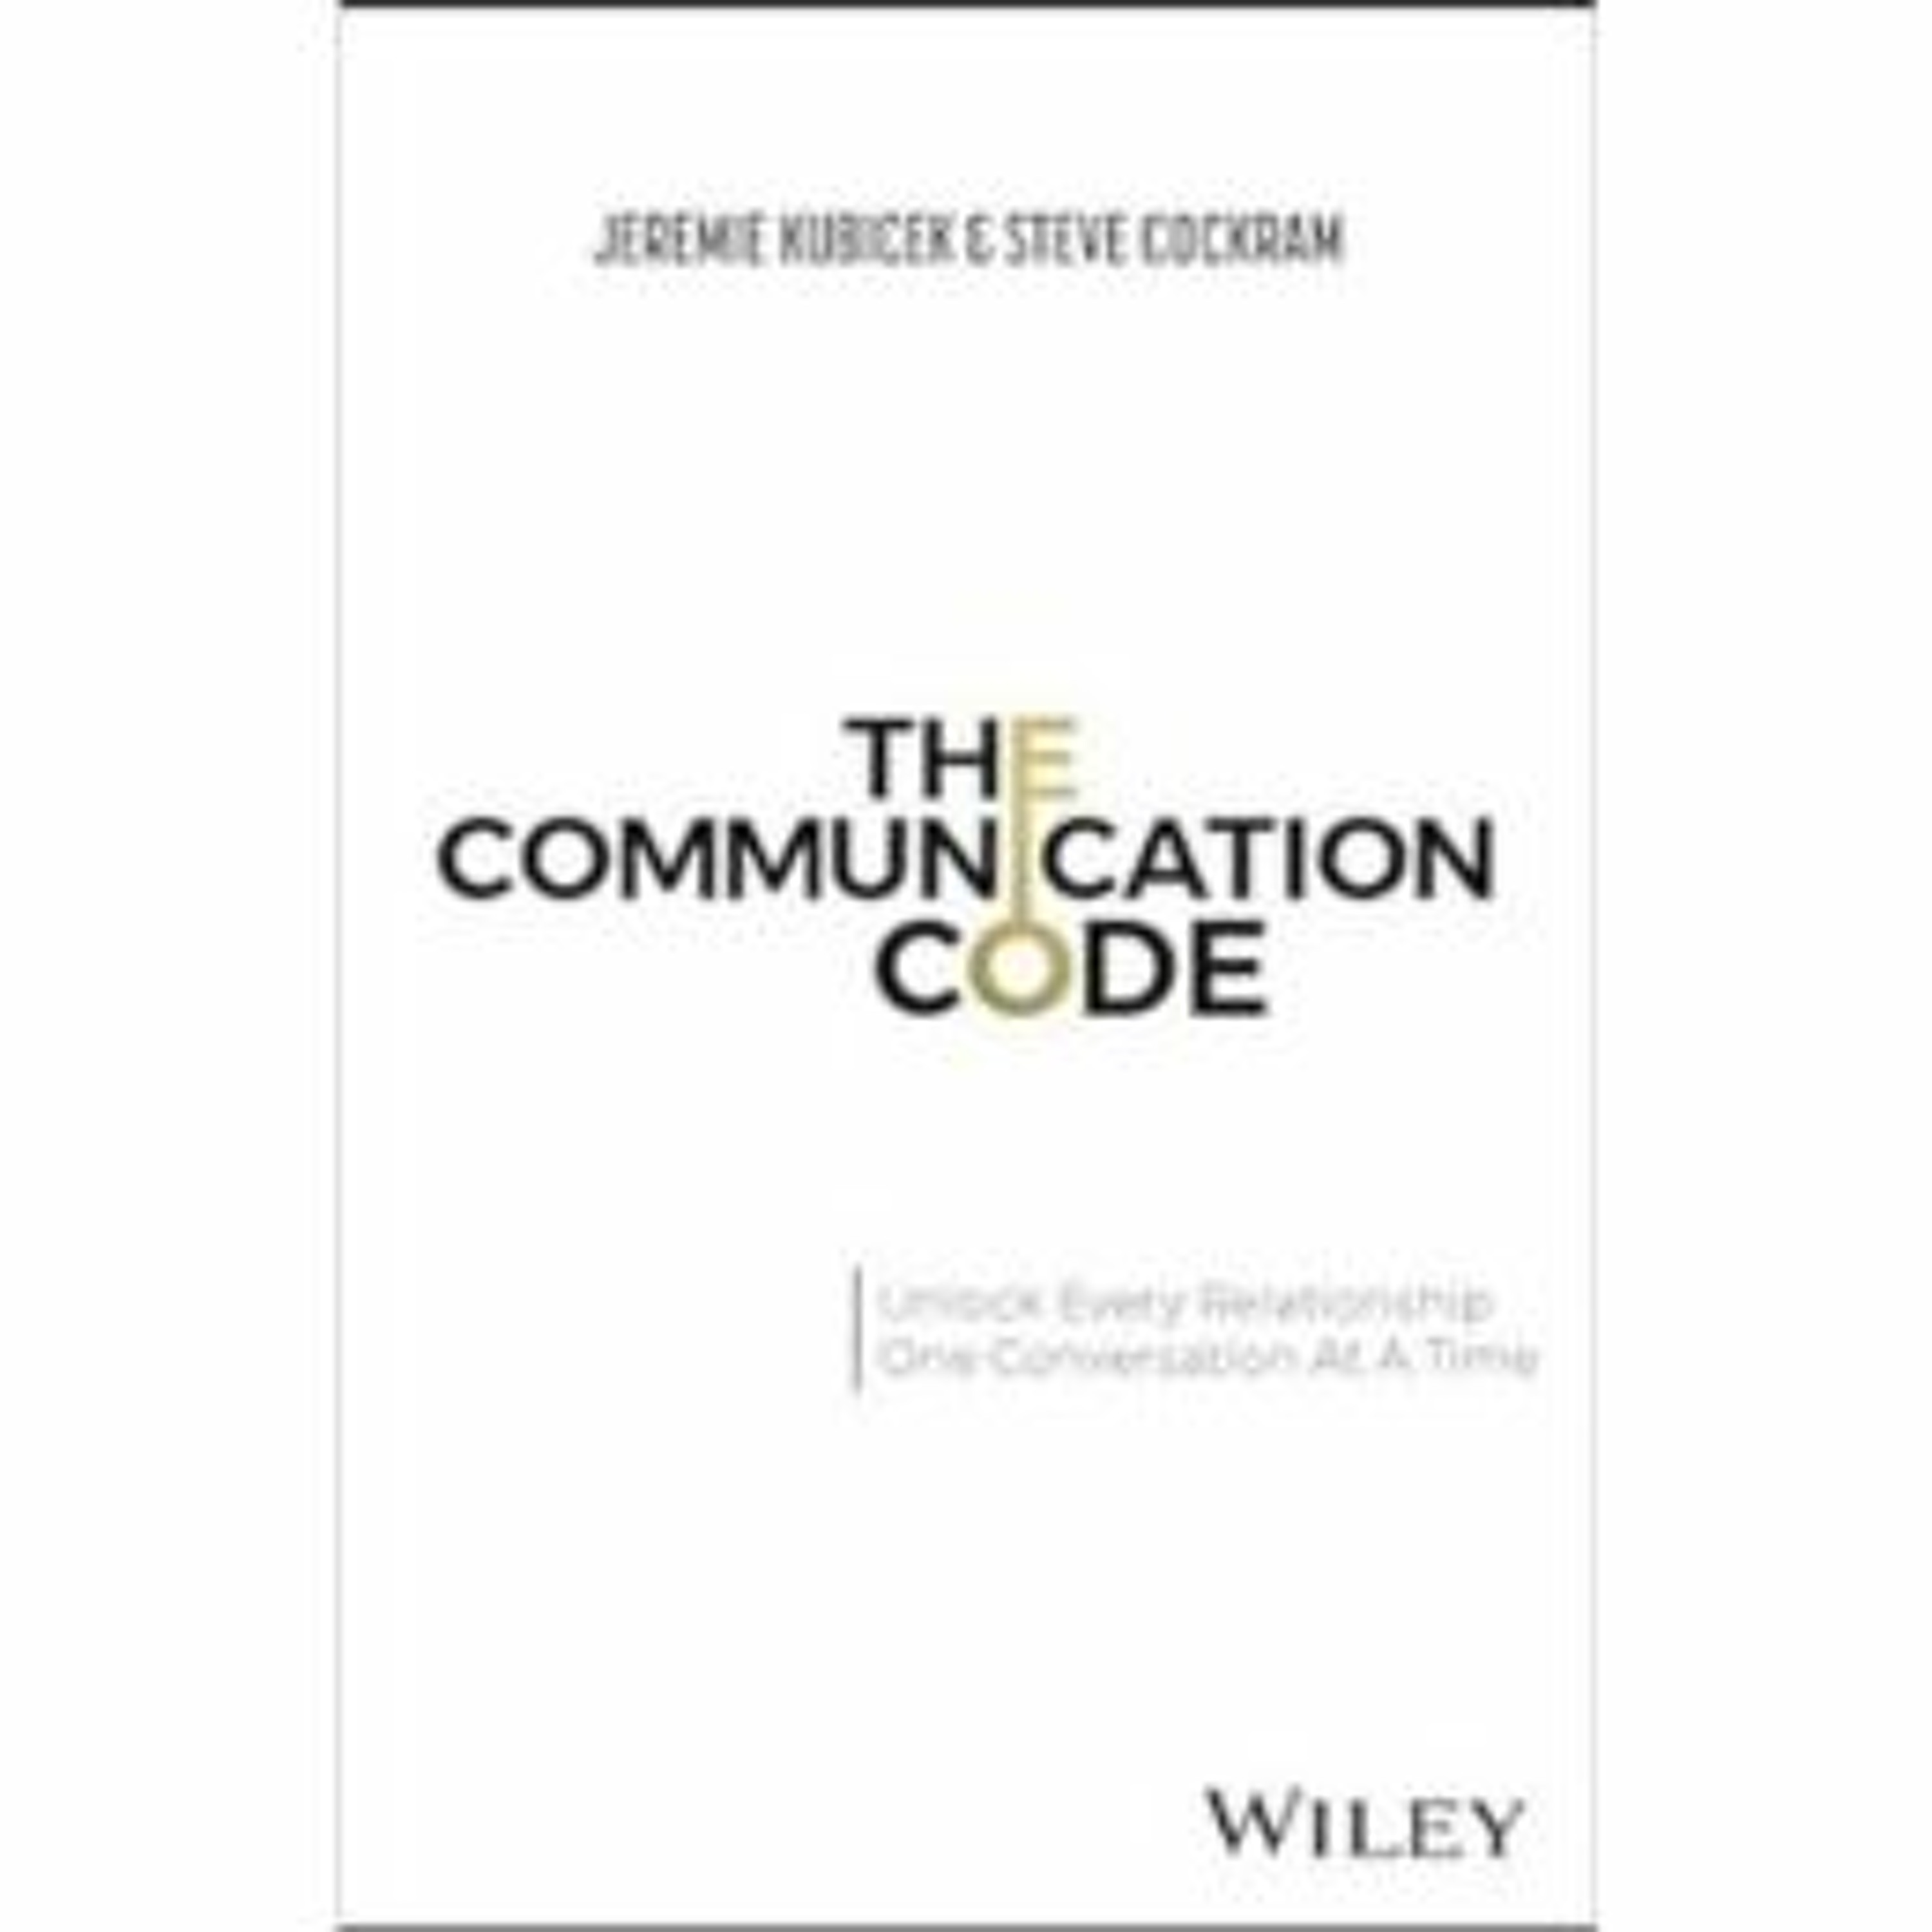 Podcast 1086: The Communication Code with Jeremie Kubicek